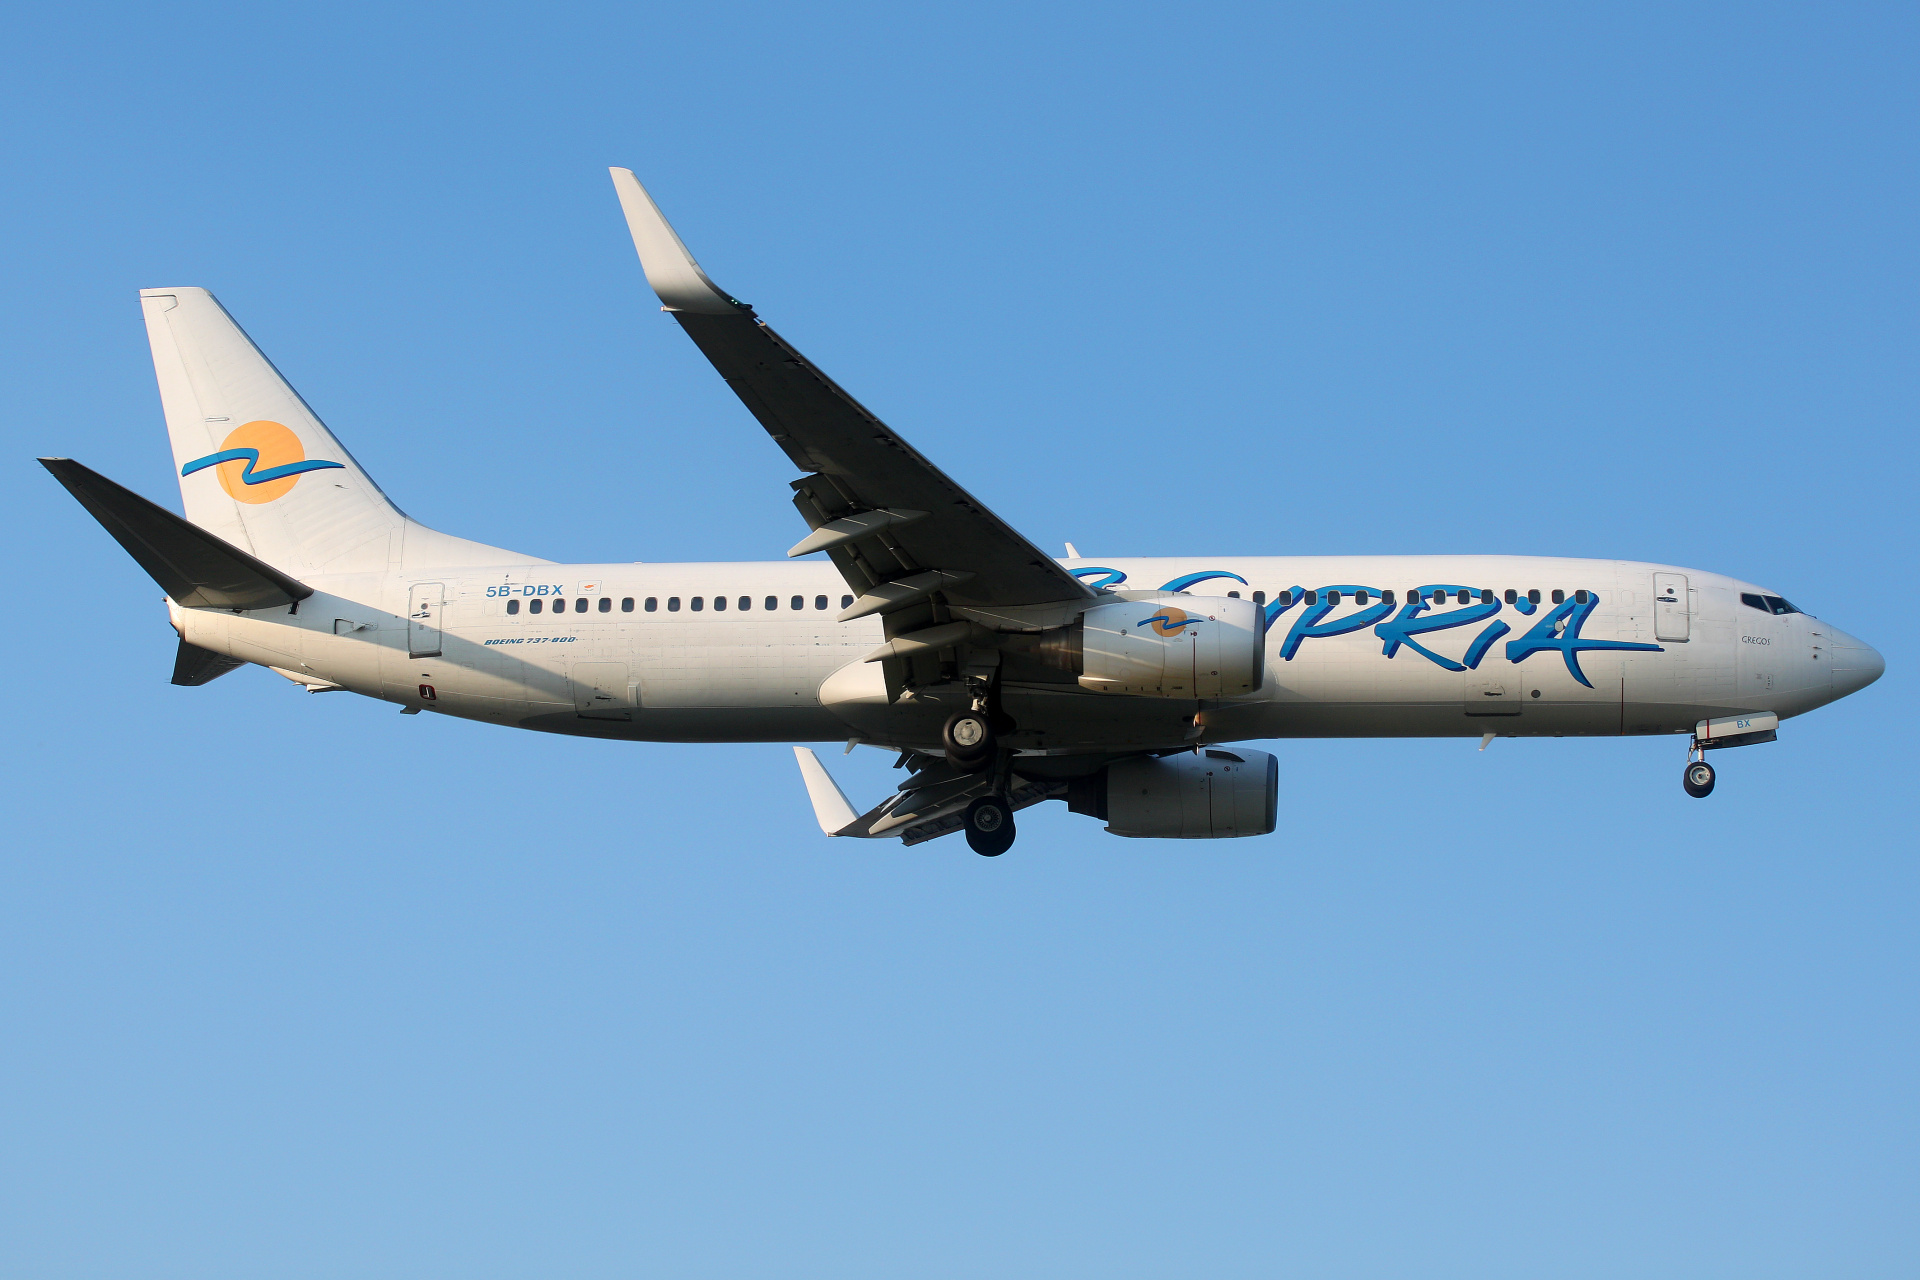 5B-DBX (Aircraft » EPWA Spotting » Boeing 737-800 » Eurocypria)